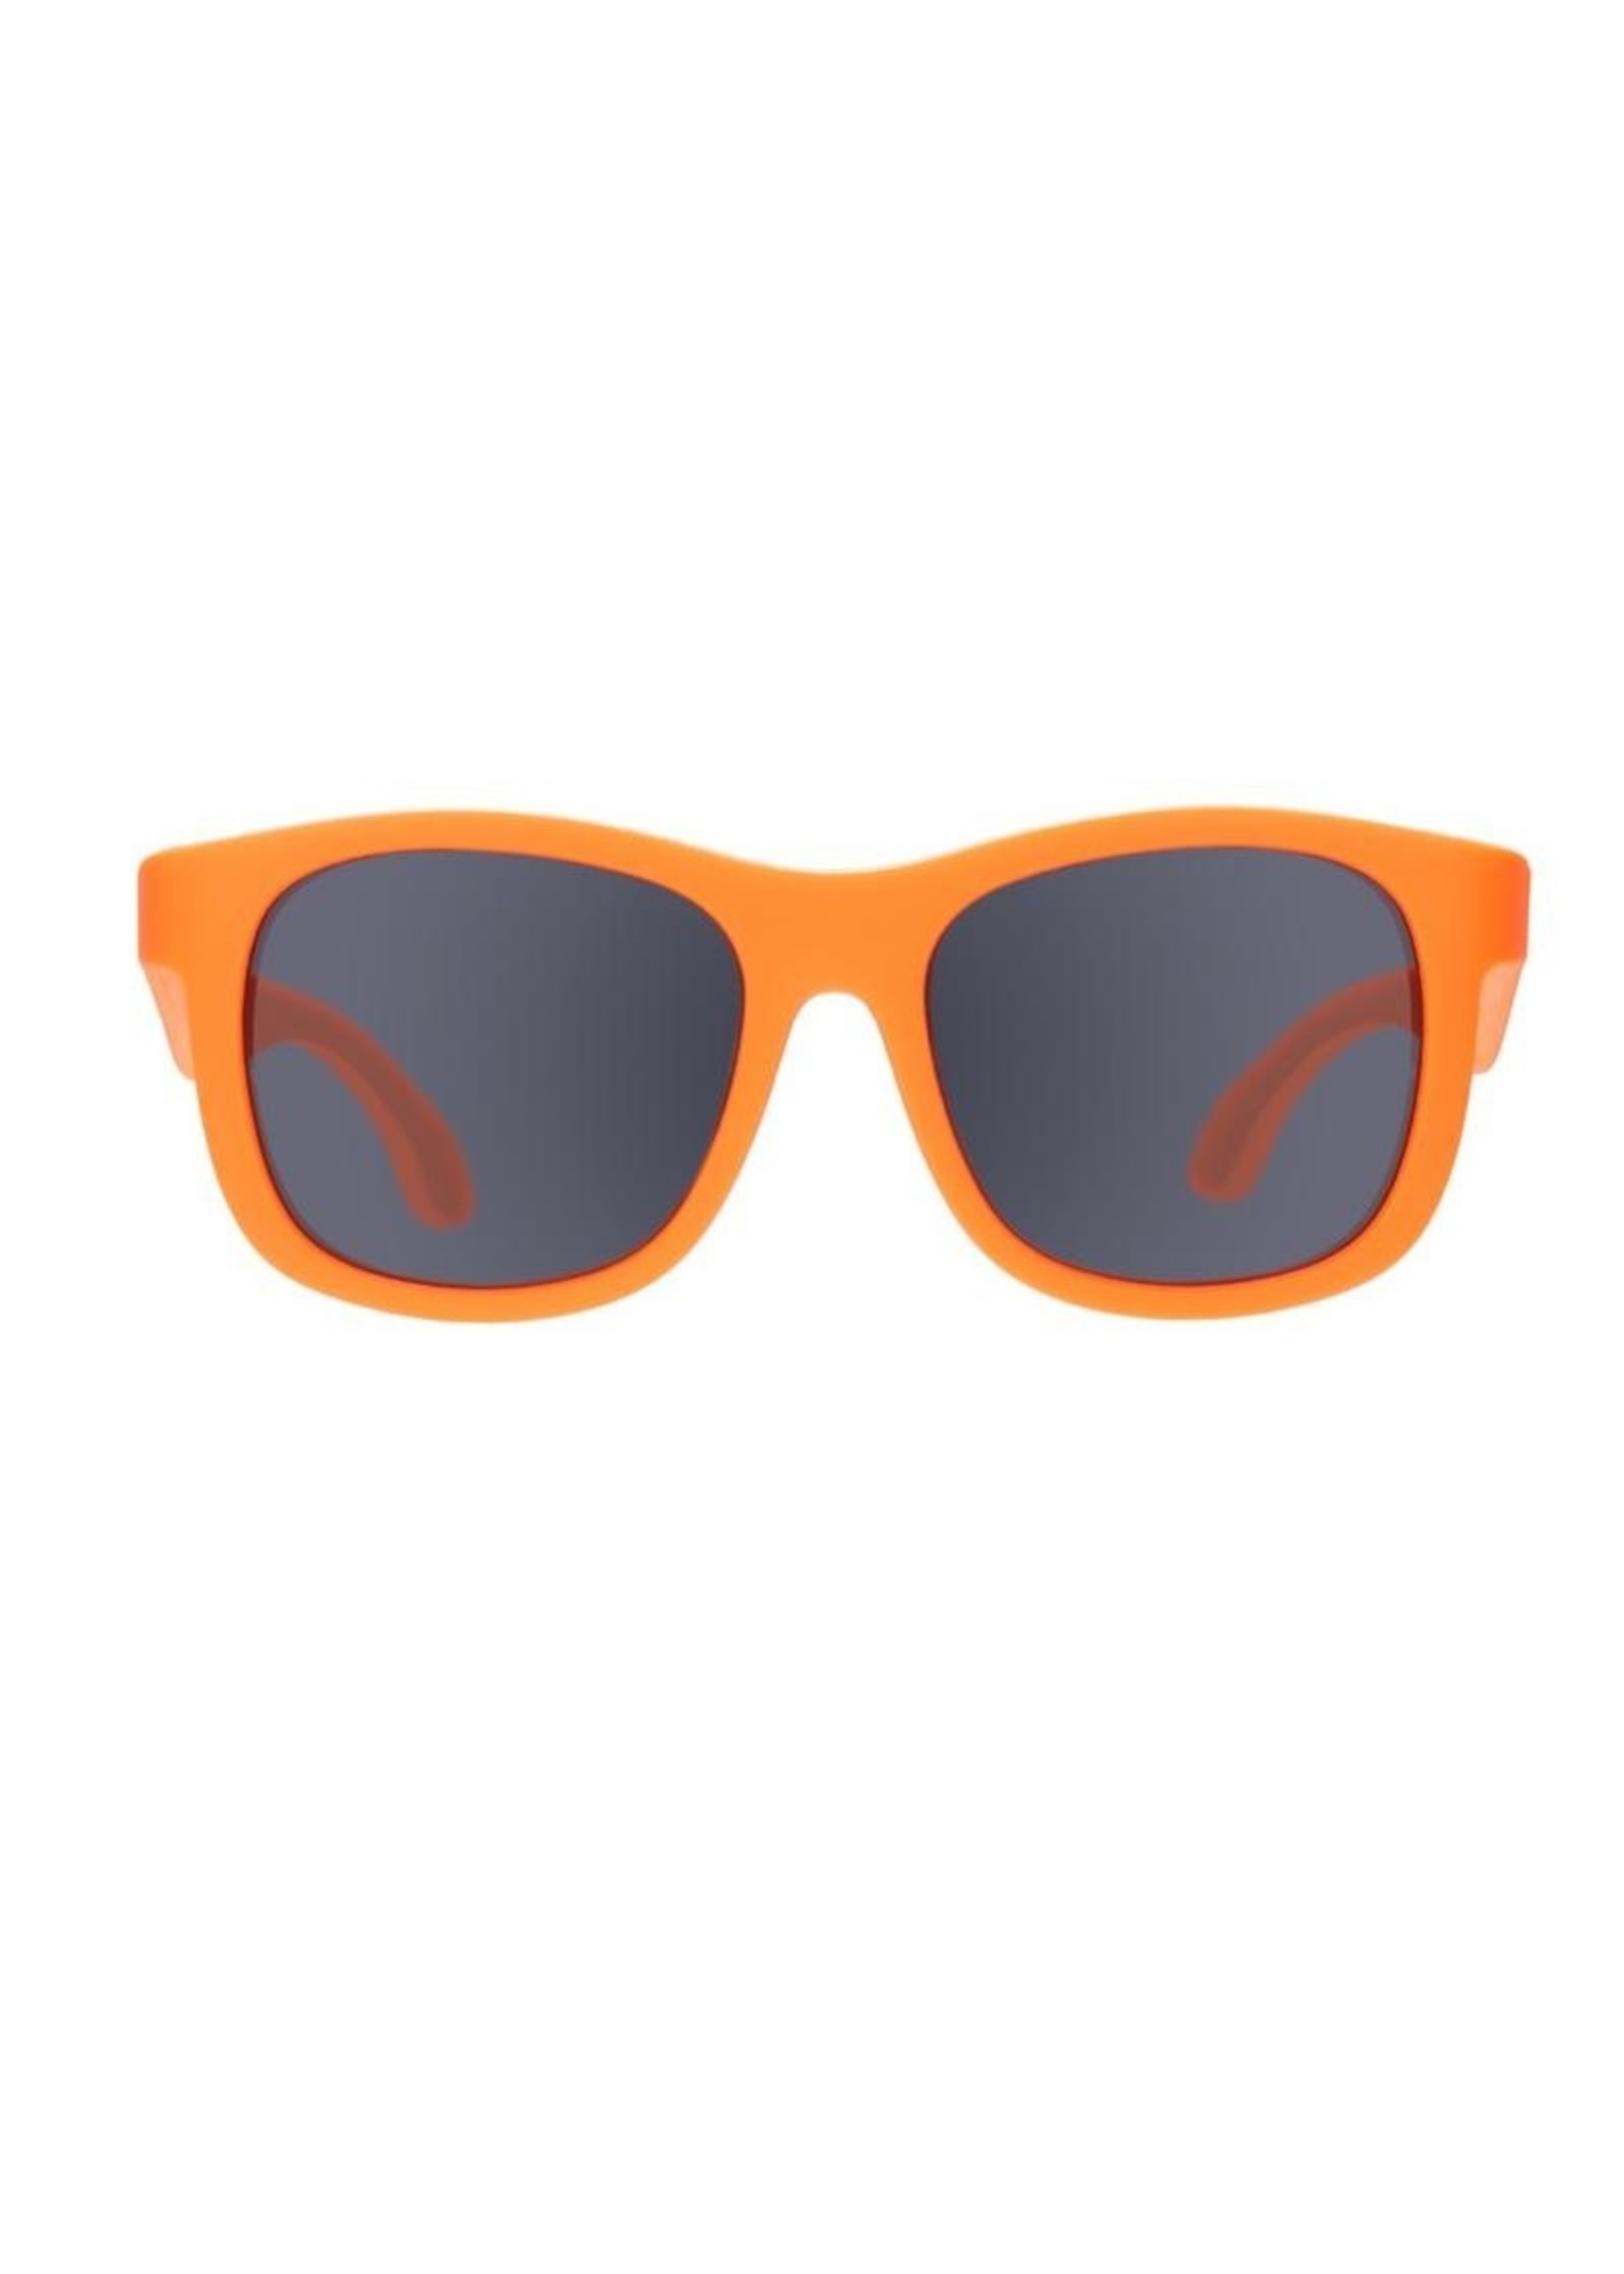 Babiators Babiators, Original Navigator Orange Crush Sunglasses